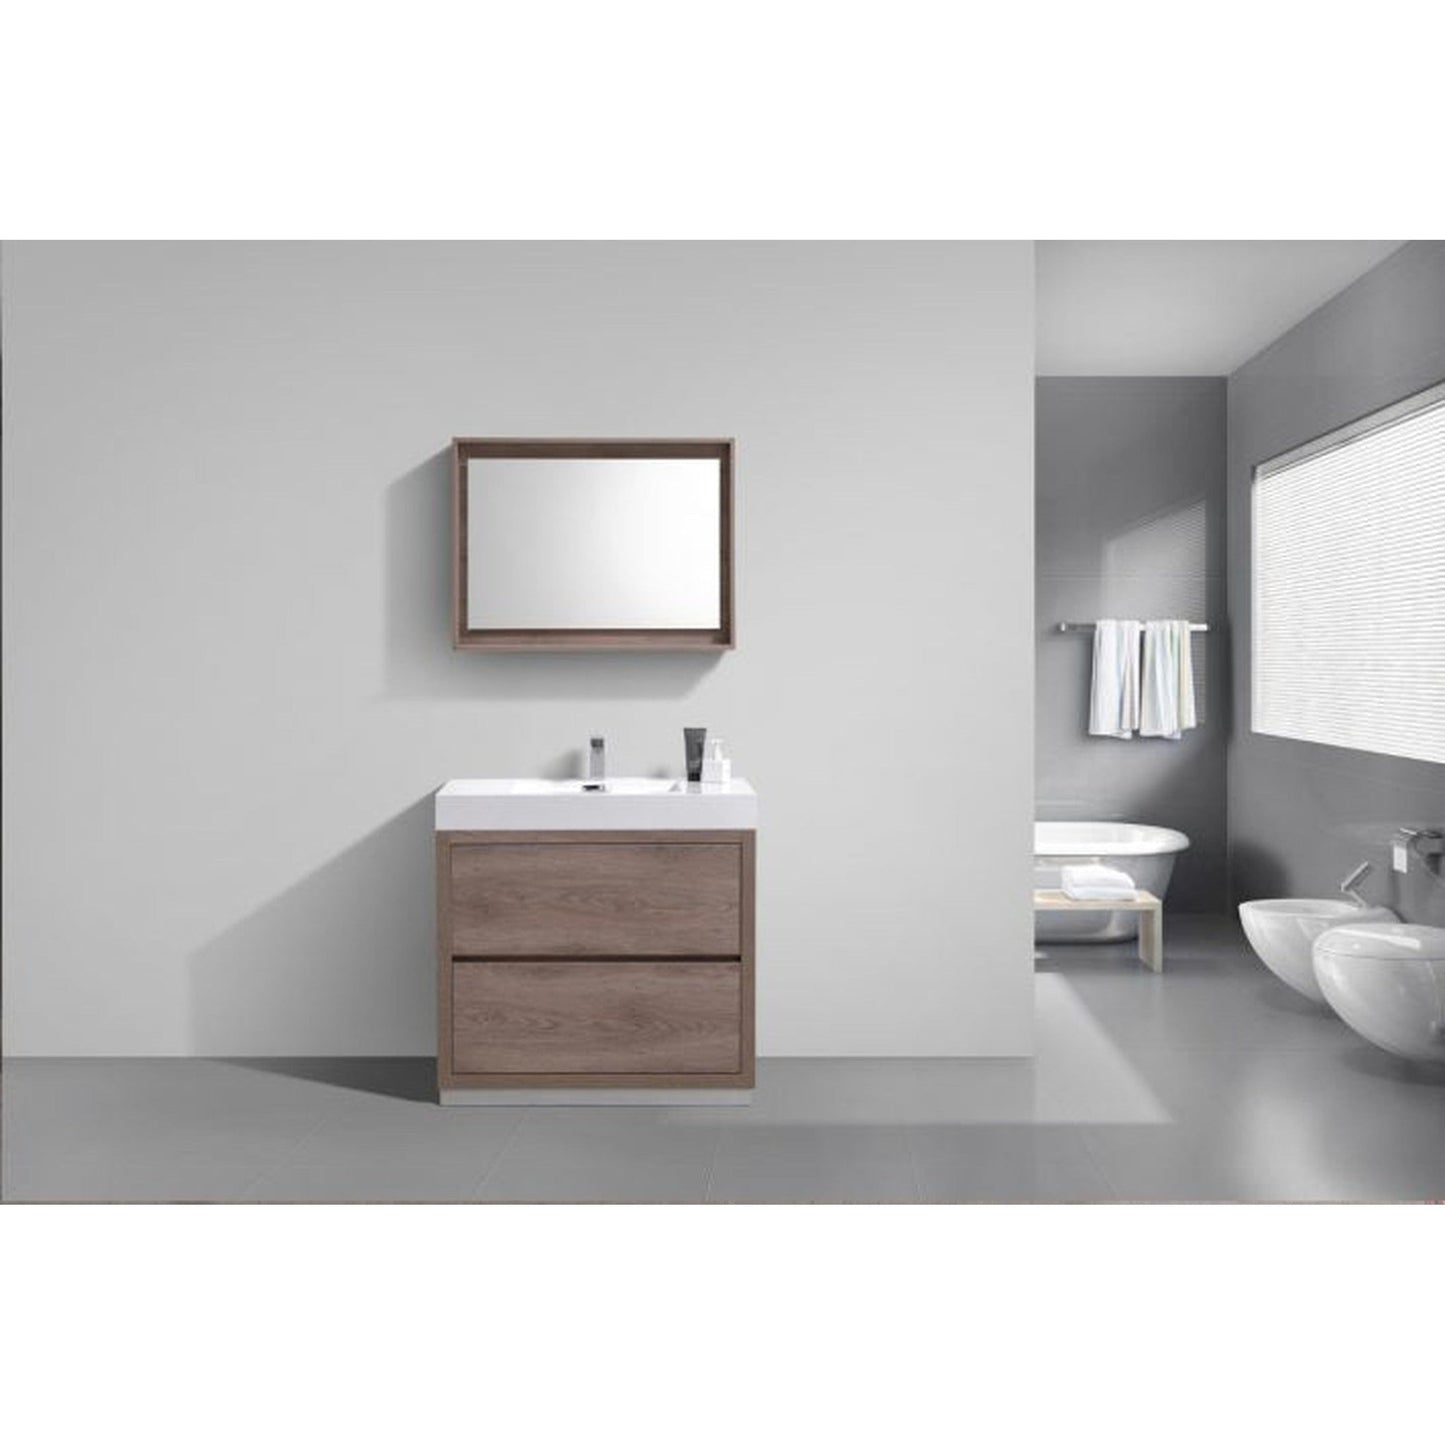 KubeBath Bliss 40" Butternut Freestanding Modern Bathroom Vanity With Single Integrated Acrylic Sink With Overflow